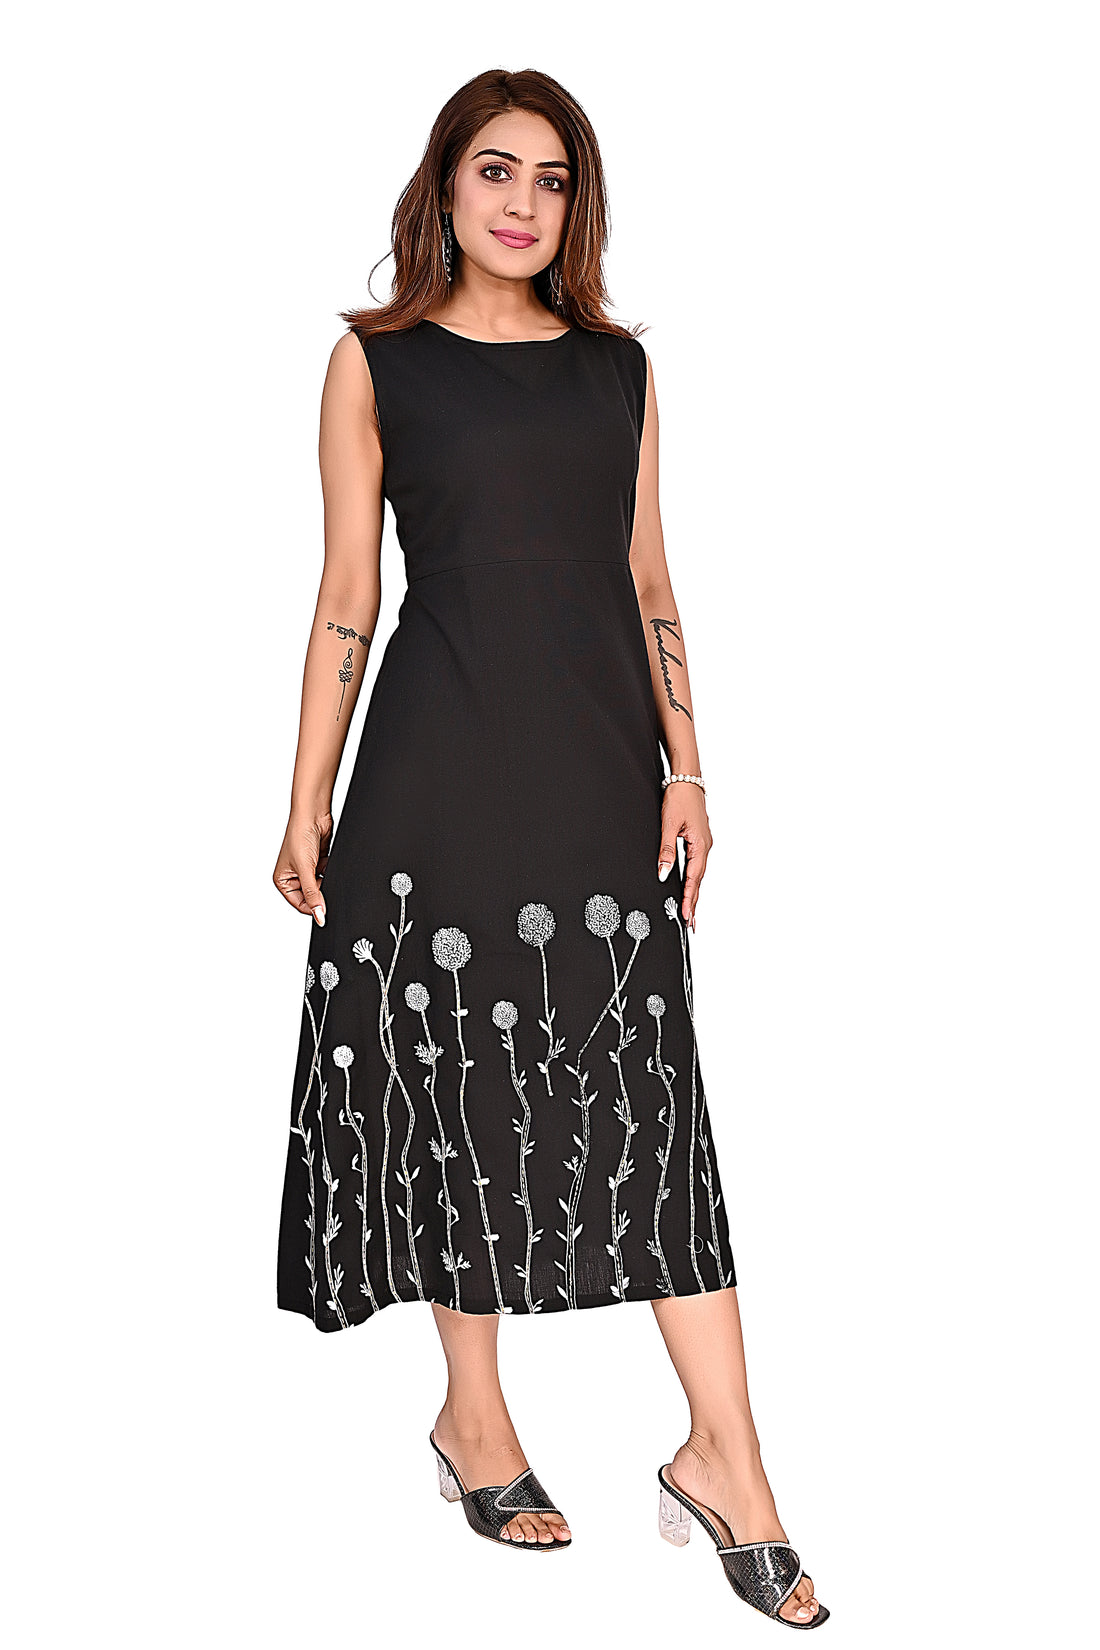 Nirmal online Premium cotton tunic Dress for Women in Black colour